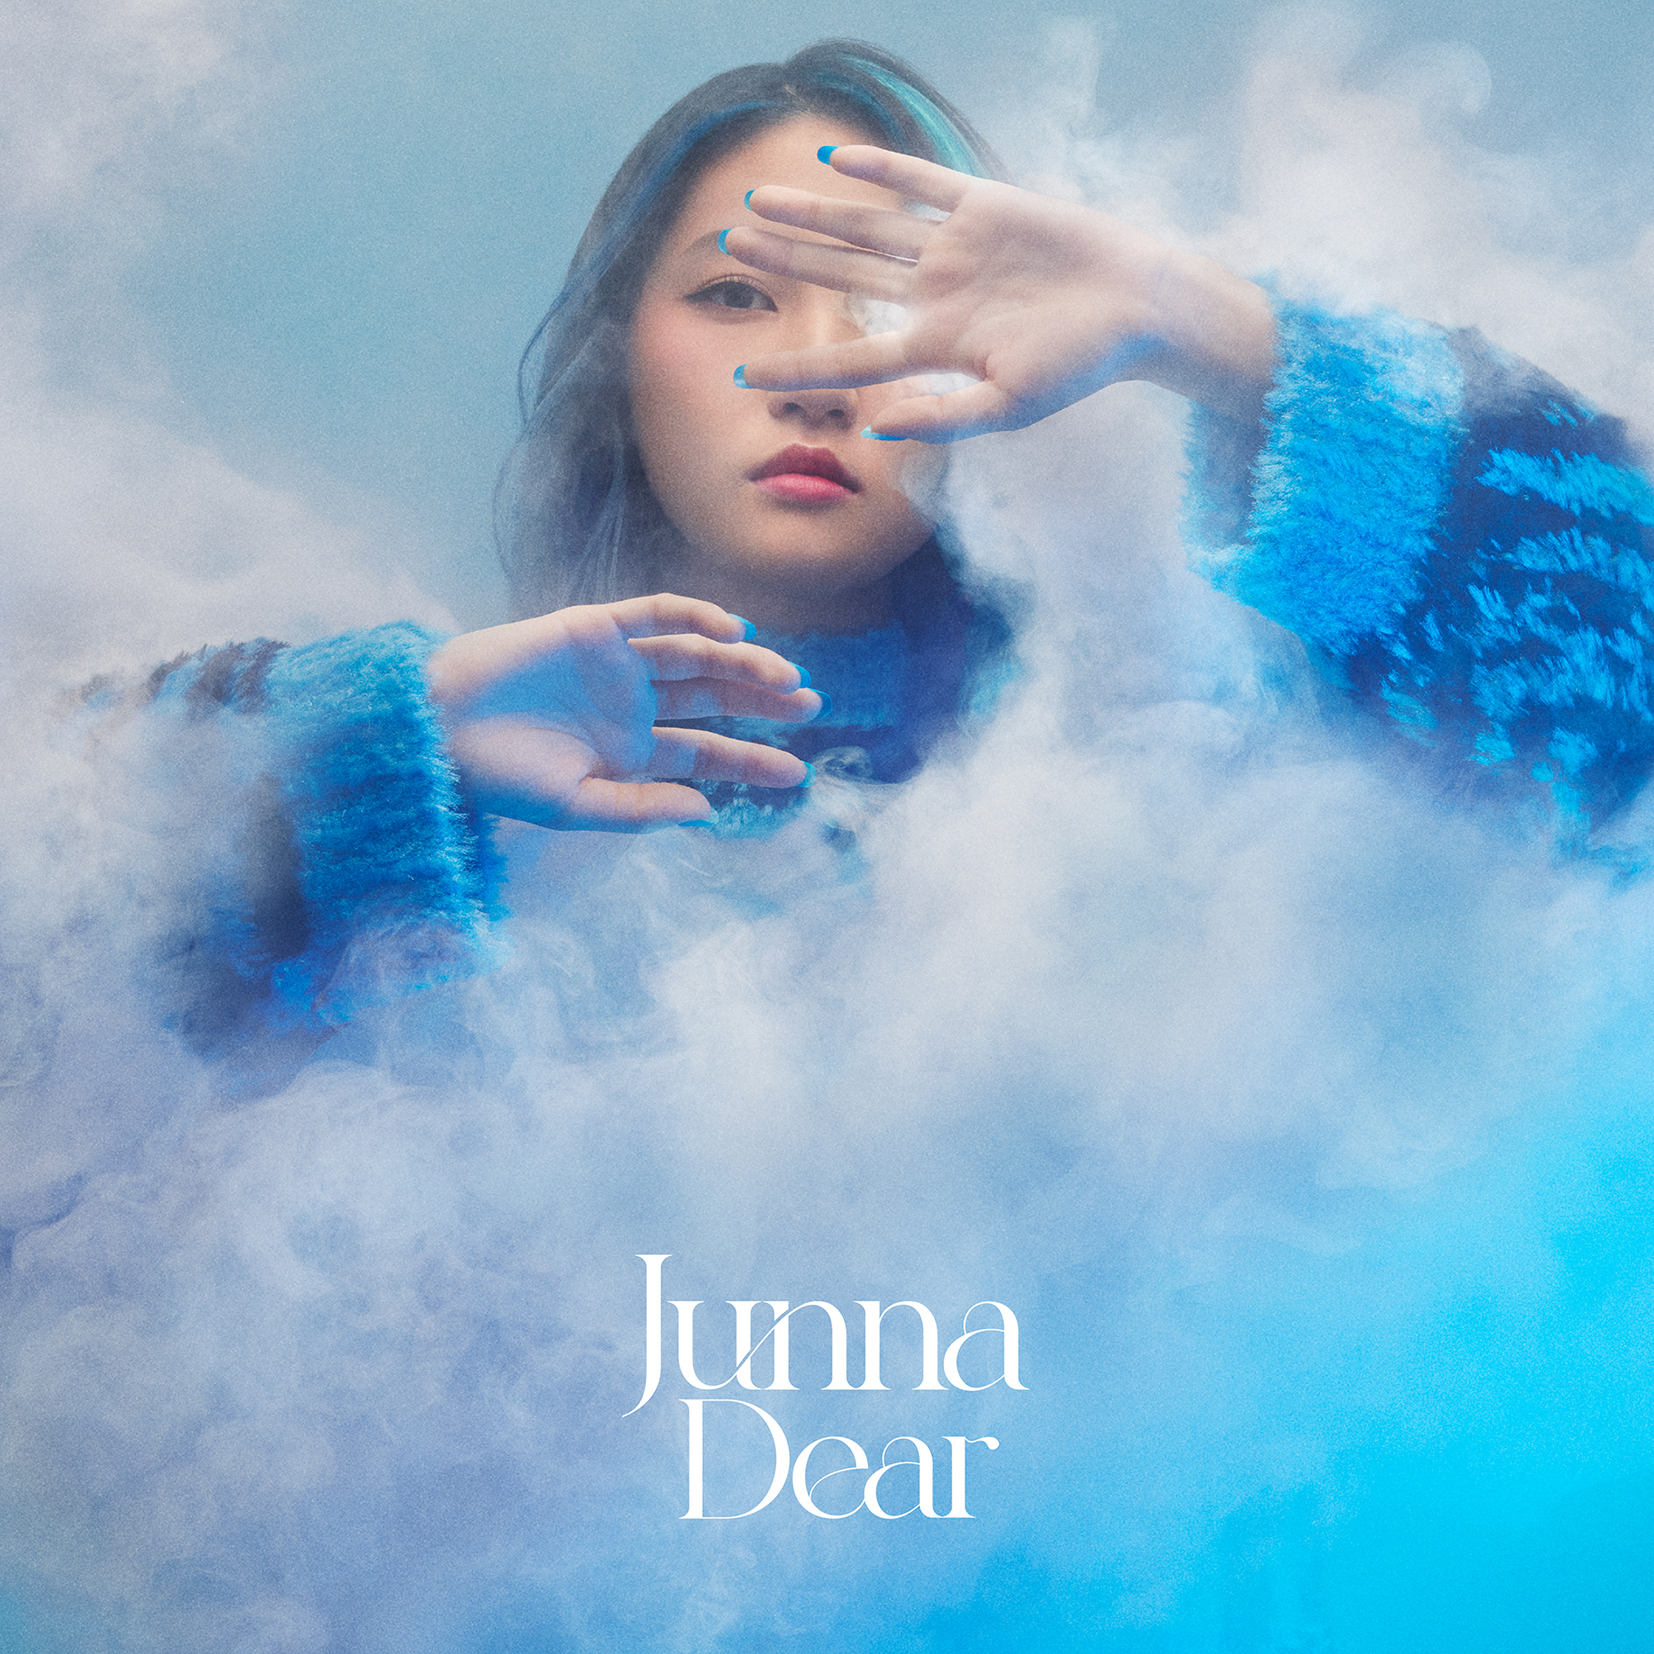 JUNNAデビュー5周年記念3rdフルアルバム『Dear』通常盤